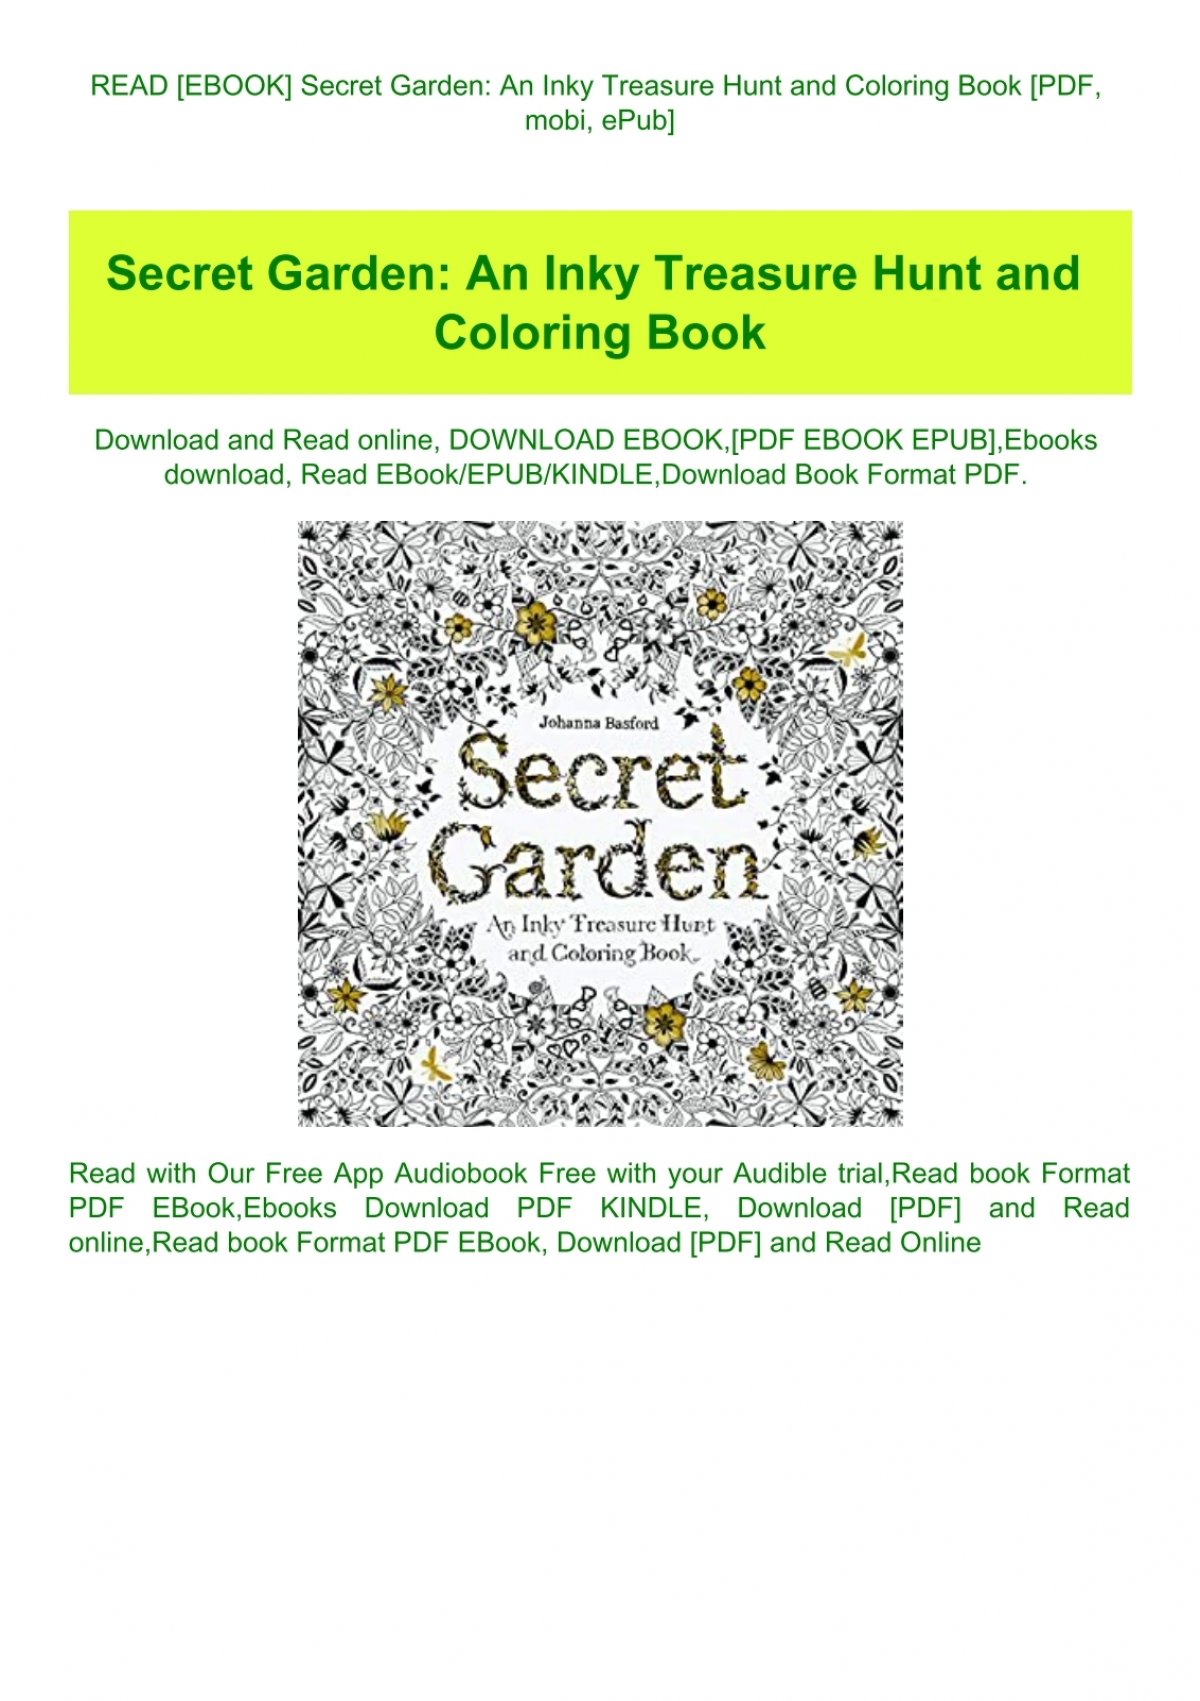 Download Read Ebook Secret Garden An Inky Treasure Hunt And Coloring Book Pdf Mobi Epub